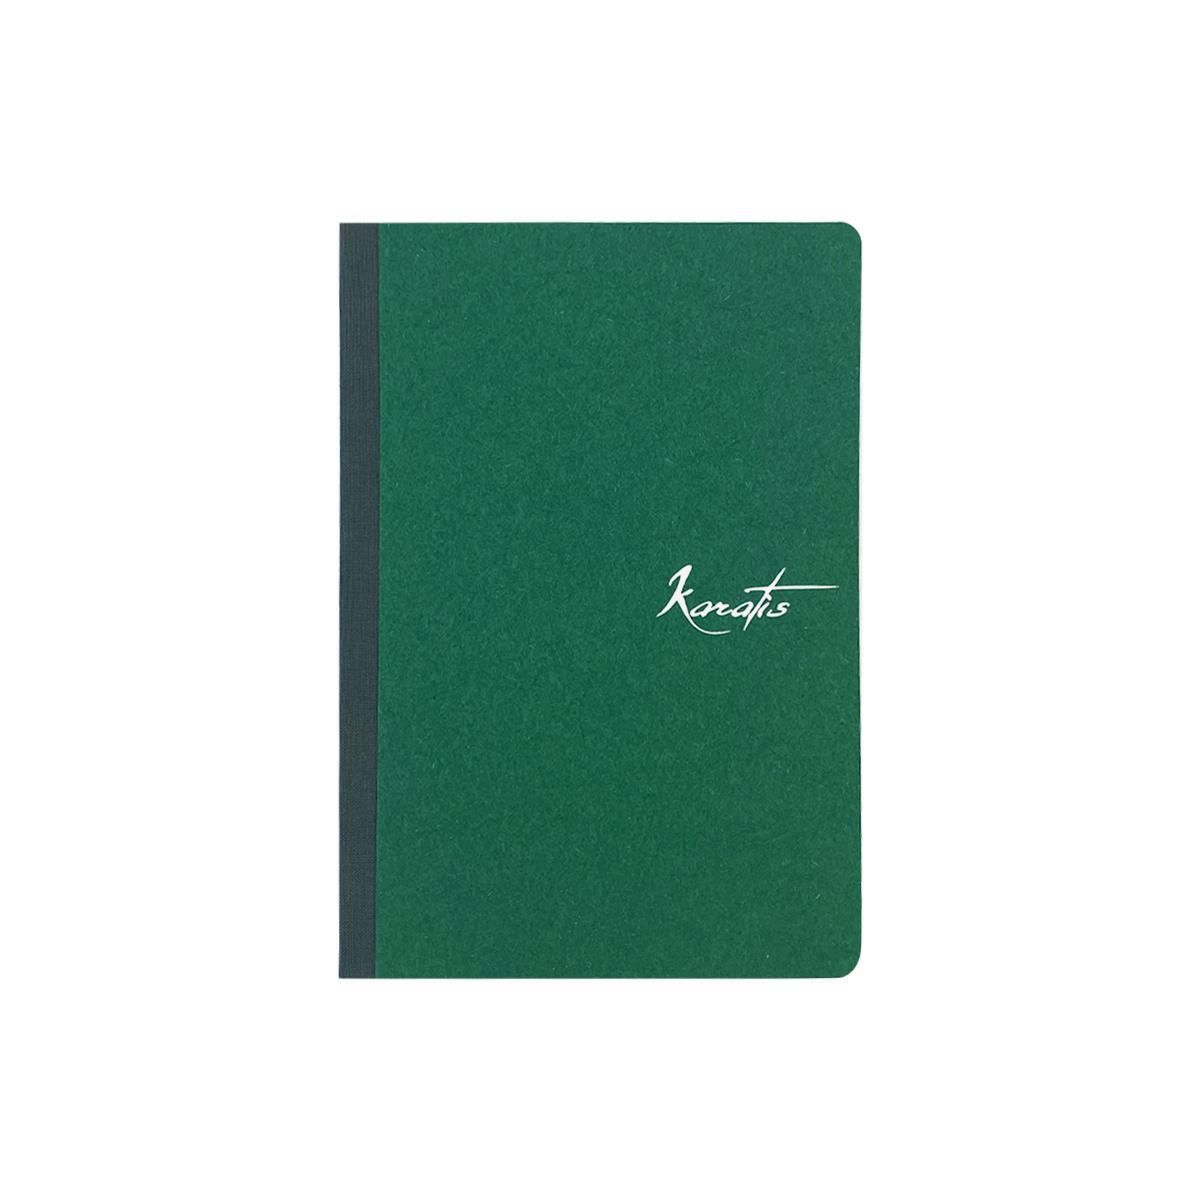 Karatis Selva Tomoe River Paper Notebook